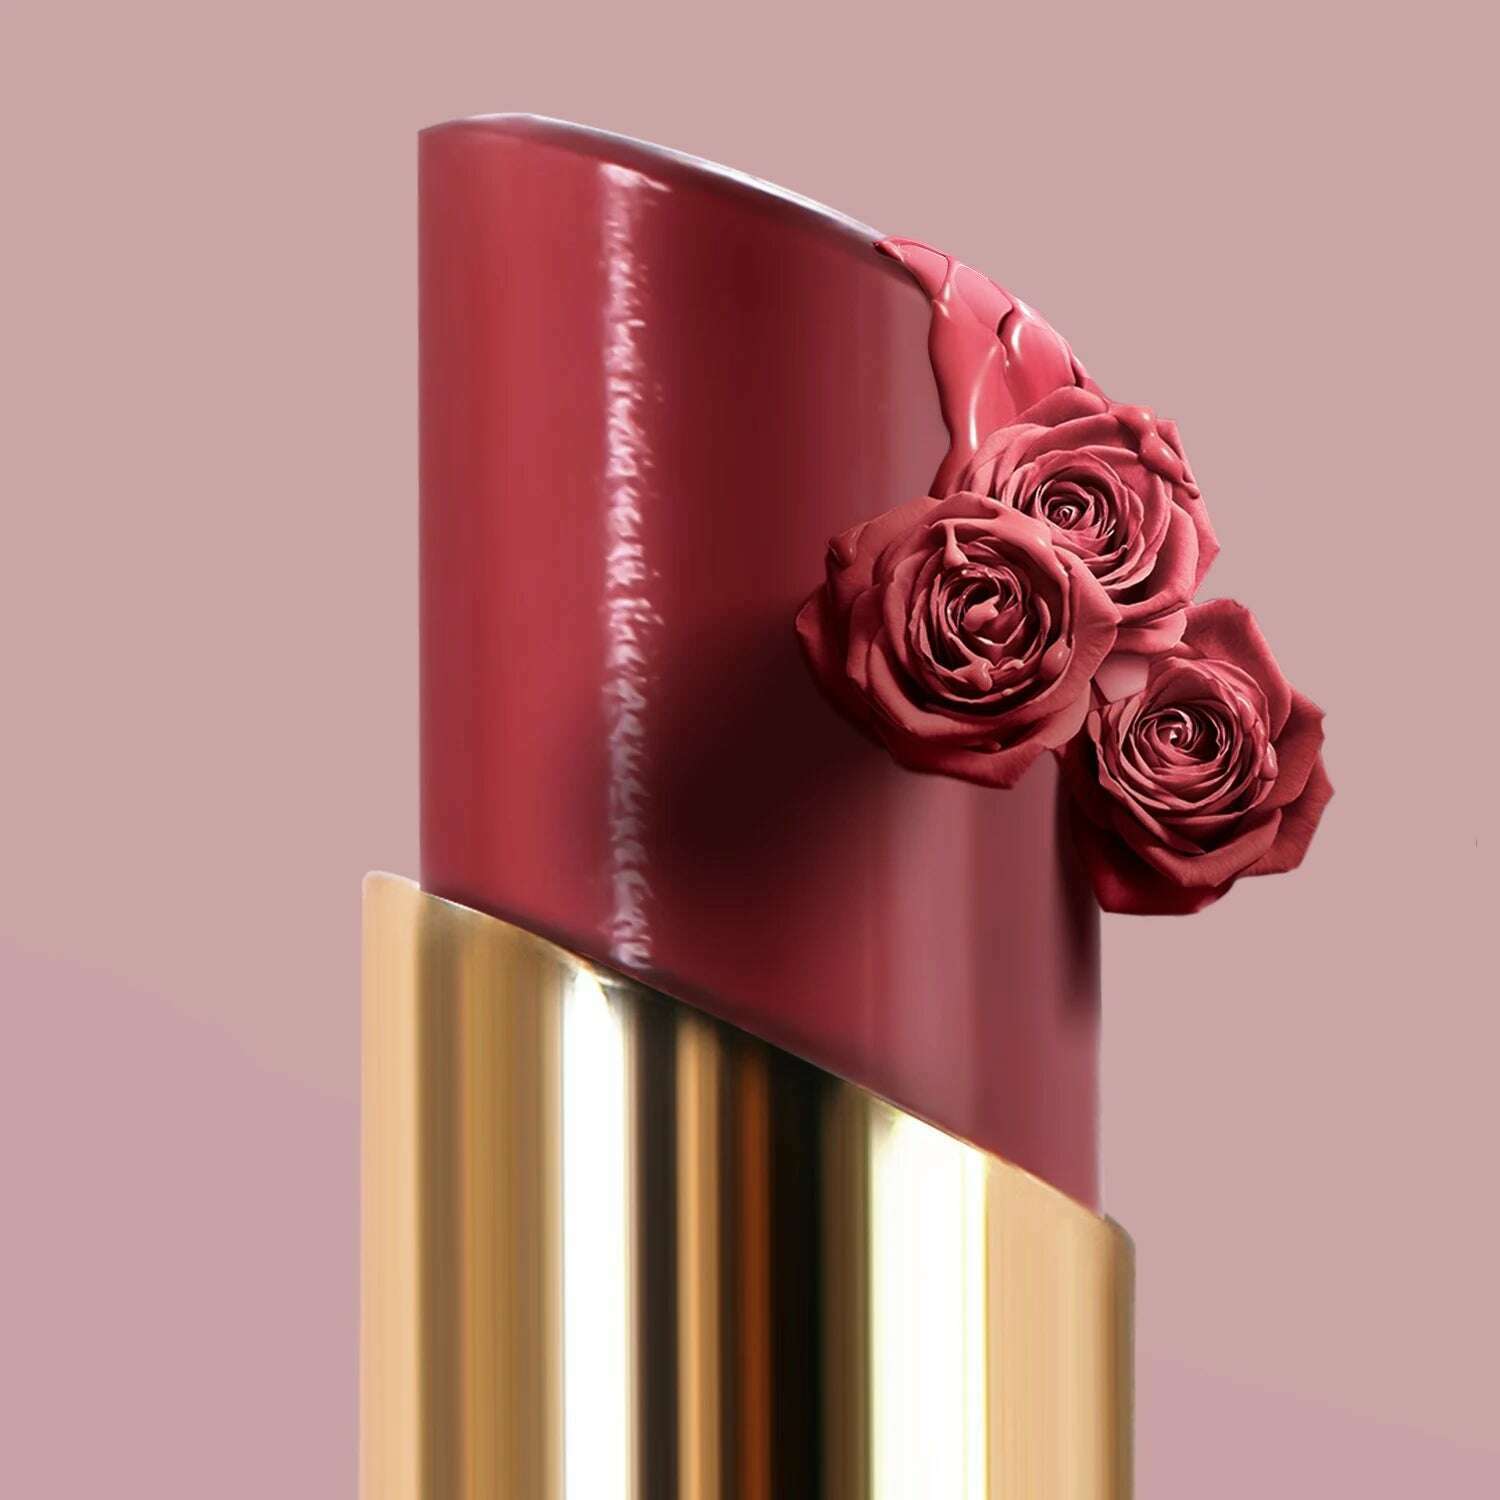 KIMLUD, CHARMACY 8 Colors Nude Moisturize Lipstick Luxury Natural High Quality Velvet Lipstick Korean Cosmetic Makeup for Lip Women, KIMLUD Women's Clothes